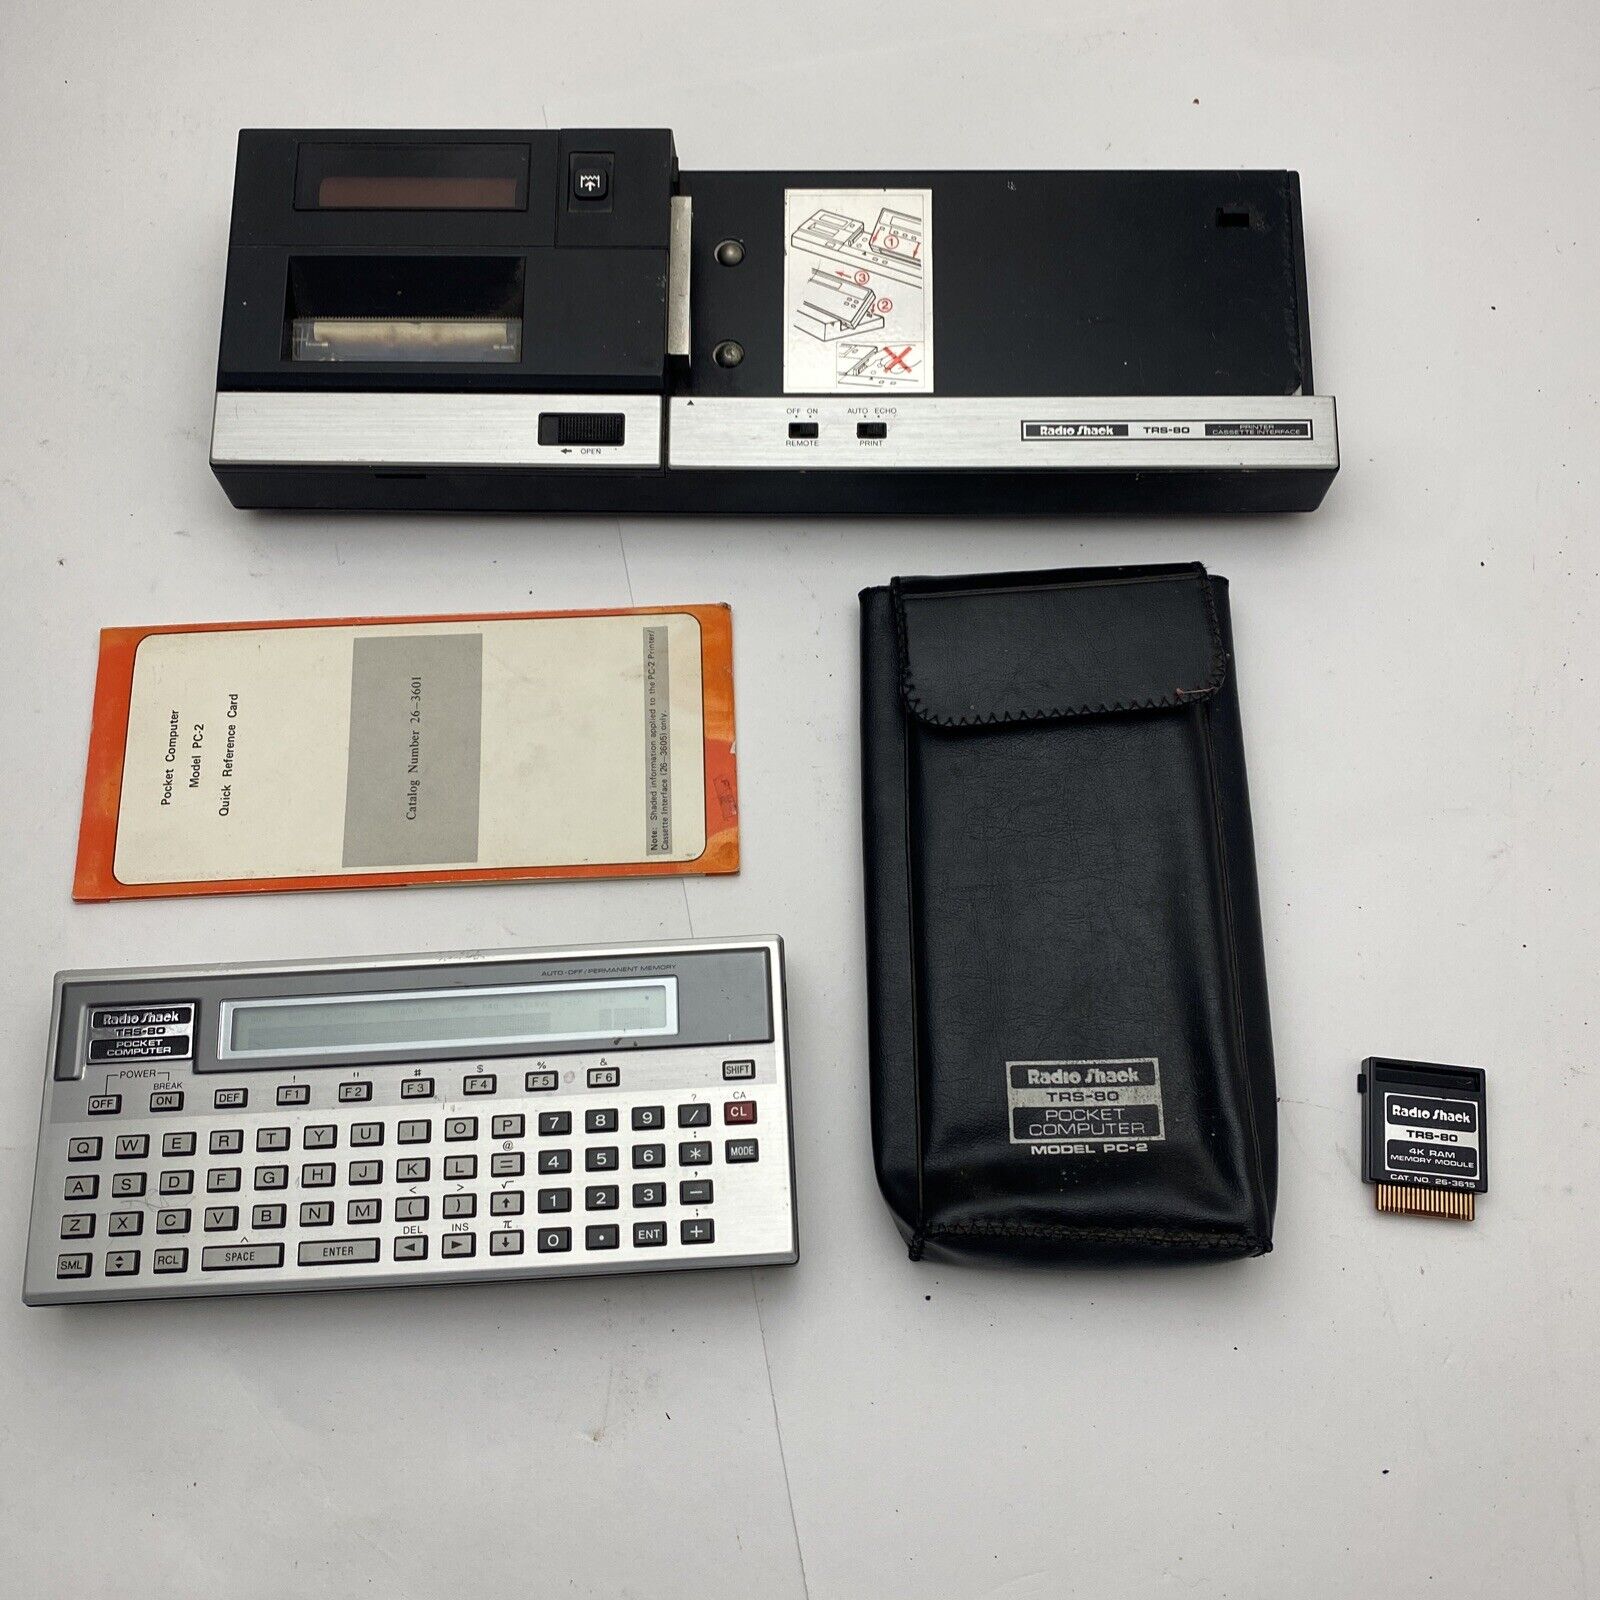 TRS-80 PC-2 Pocket Computer, 4k Memory/RAM, Case, Manual & Printer/Plotter